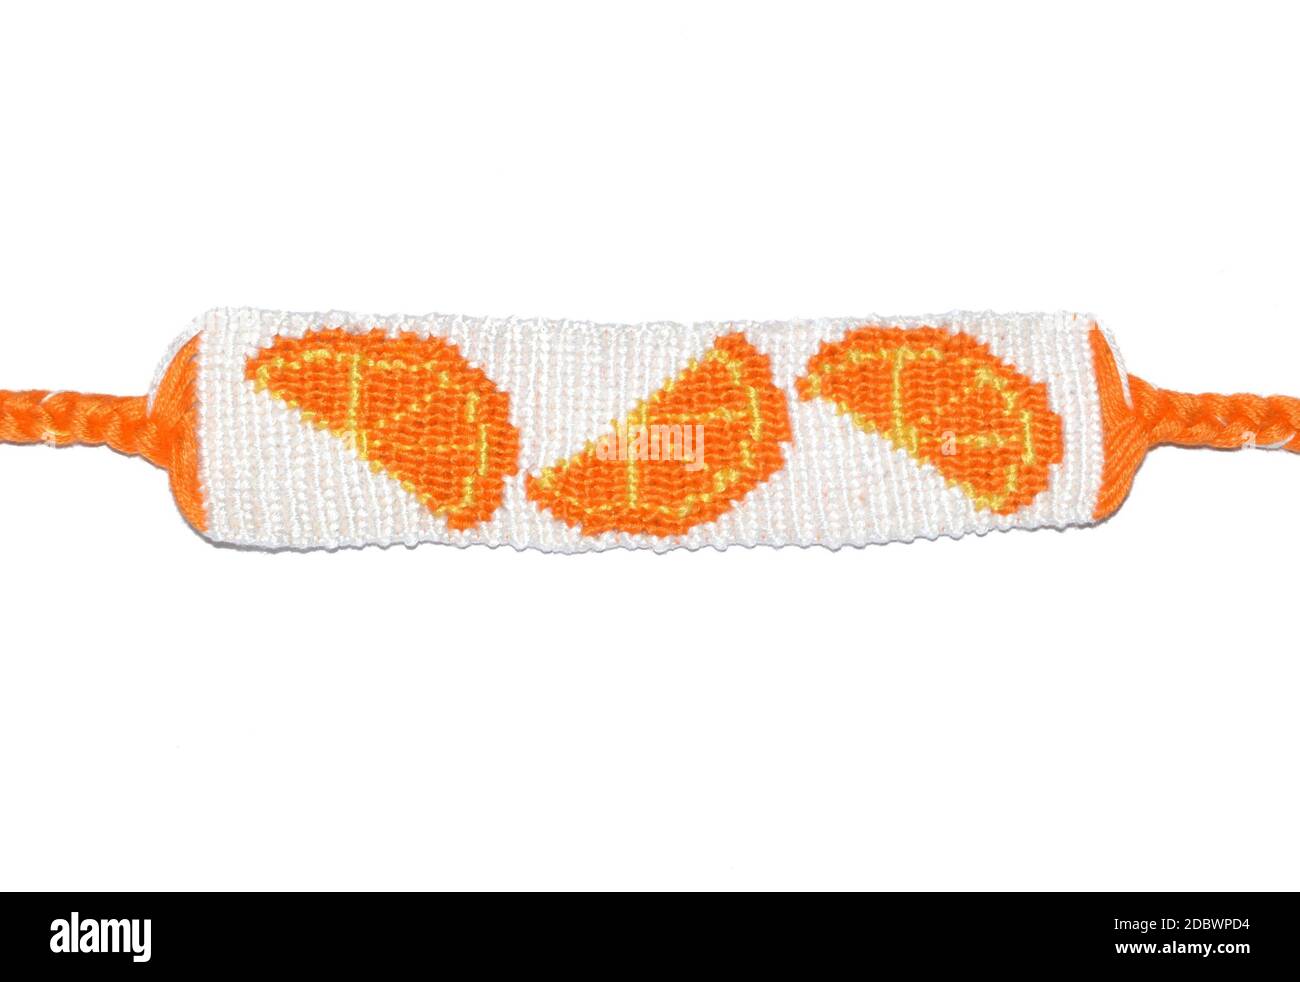 Woven friendship bracelet handmade of thread with orange fruit pattern isolated on white backgroud Stock Photo